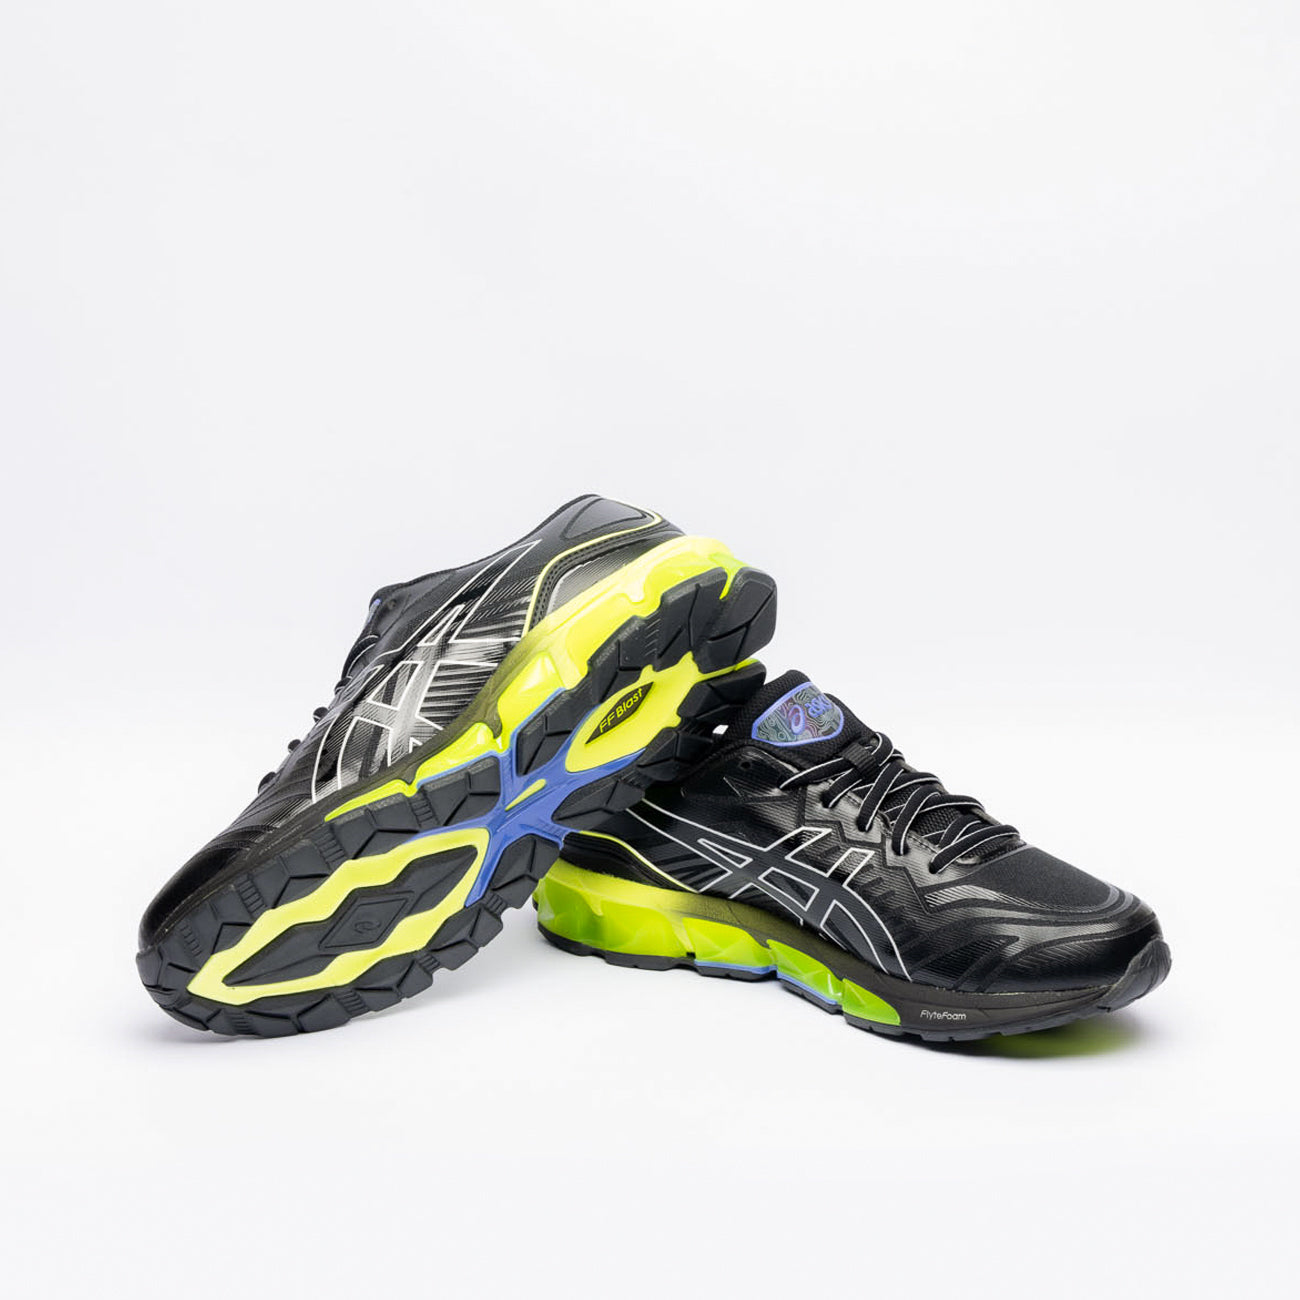 Sneaker running Asics Gel Quantum 360 VII in tessuto nero e gel giallo fluo